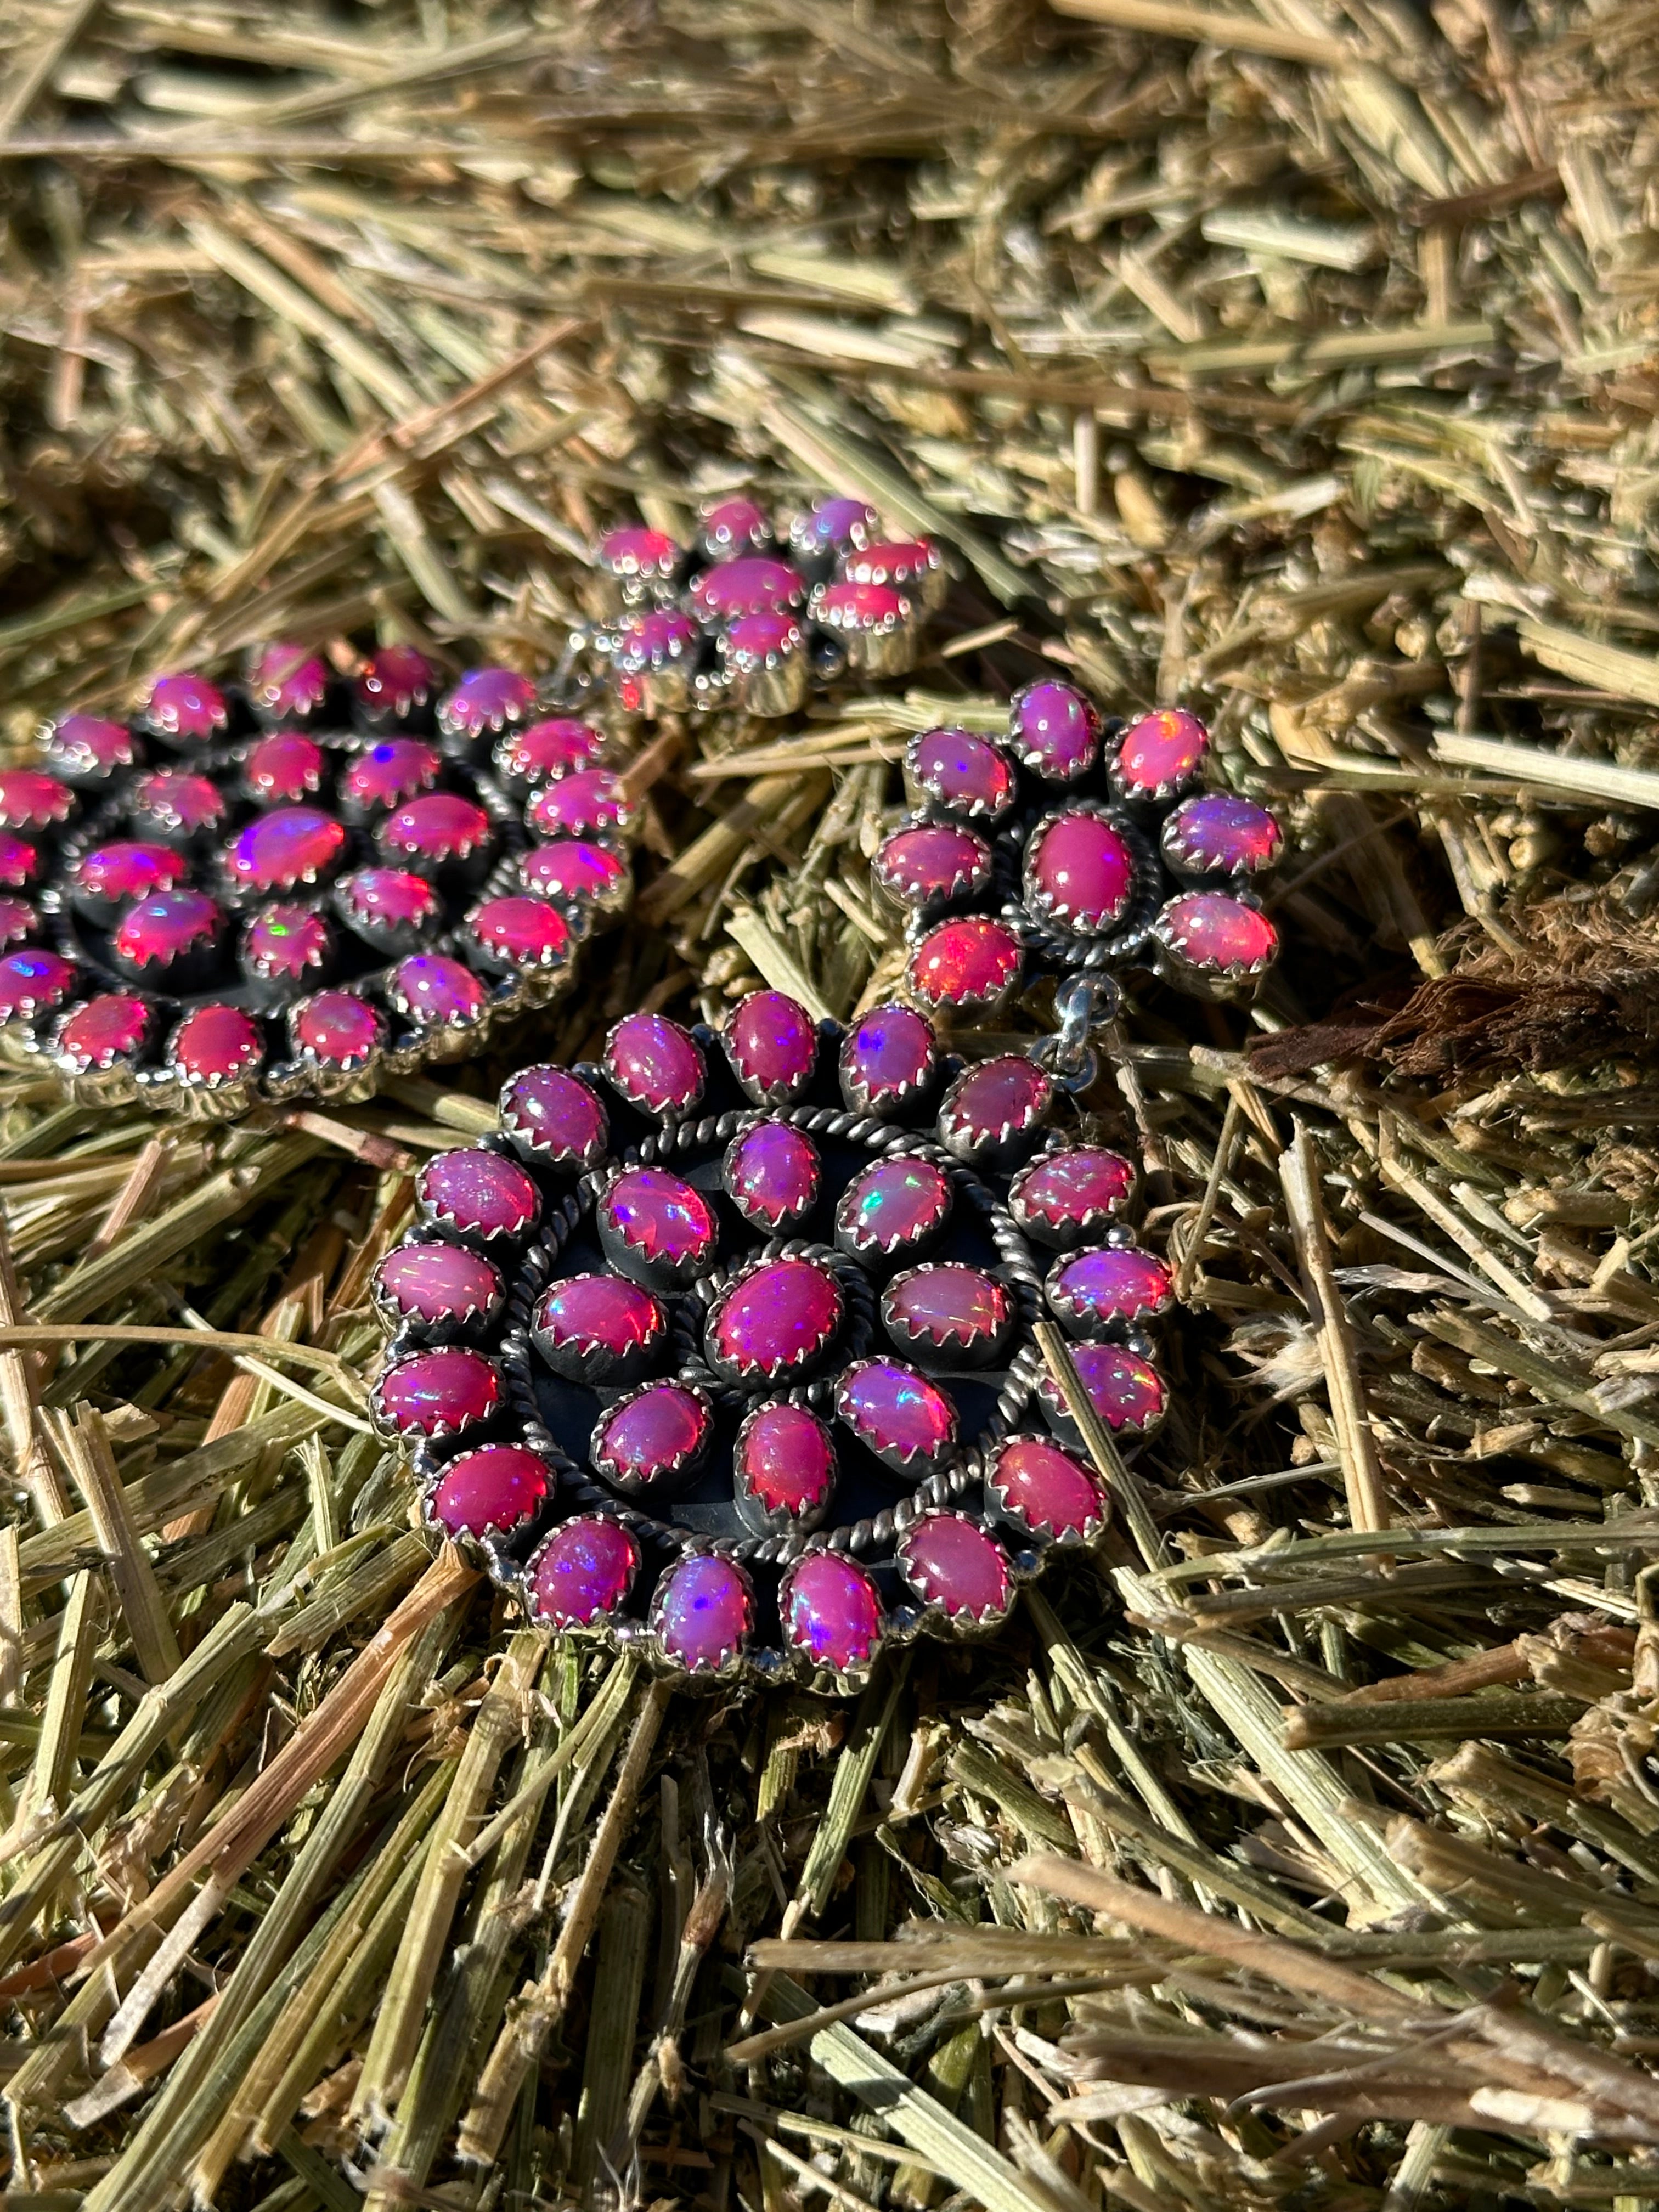 Southwest Handmade Pink Opal & Sterling Silver Post Dangle Cluster Earrings